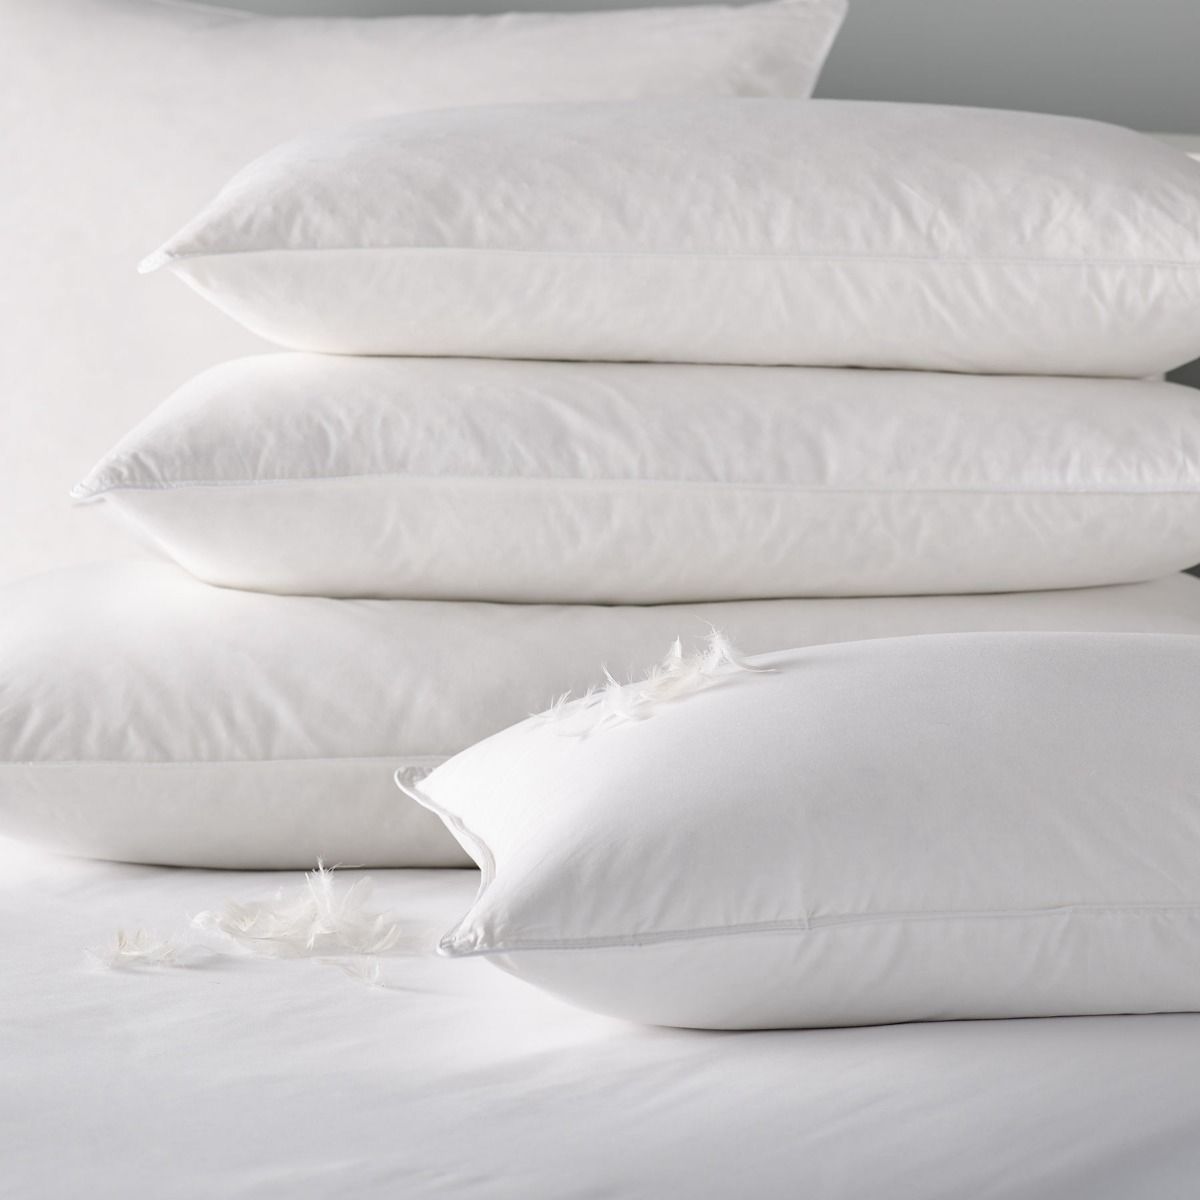 GC GAVENO CAVAILIA Duck Feather Pillows 2 Pack, Luxury Hotel